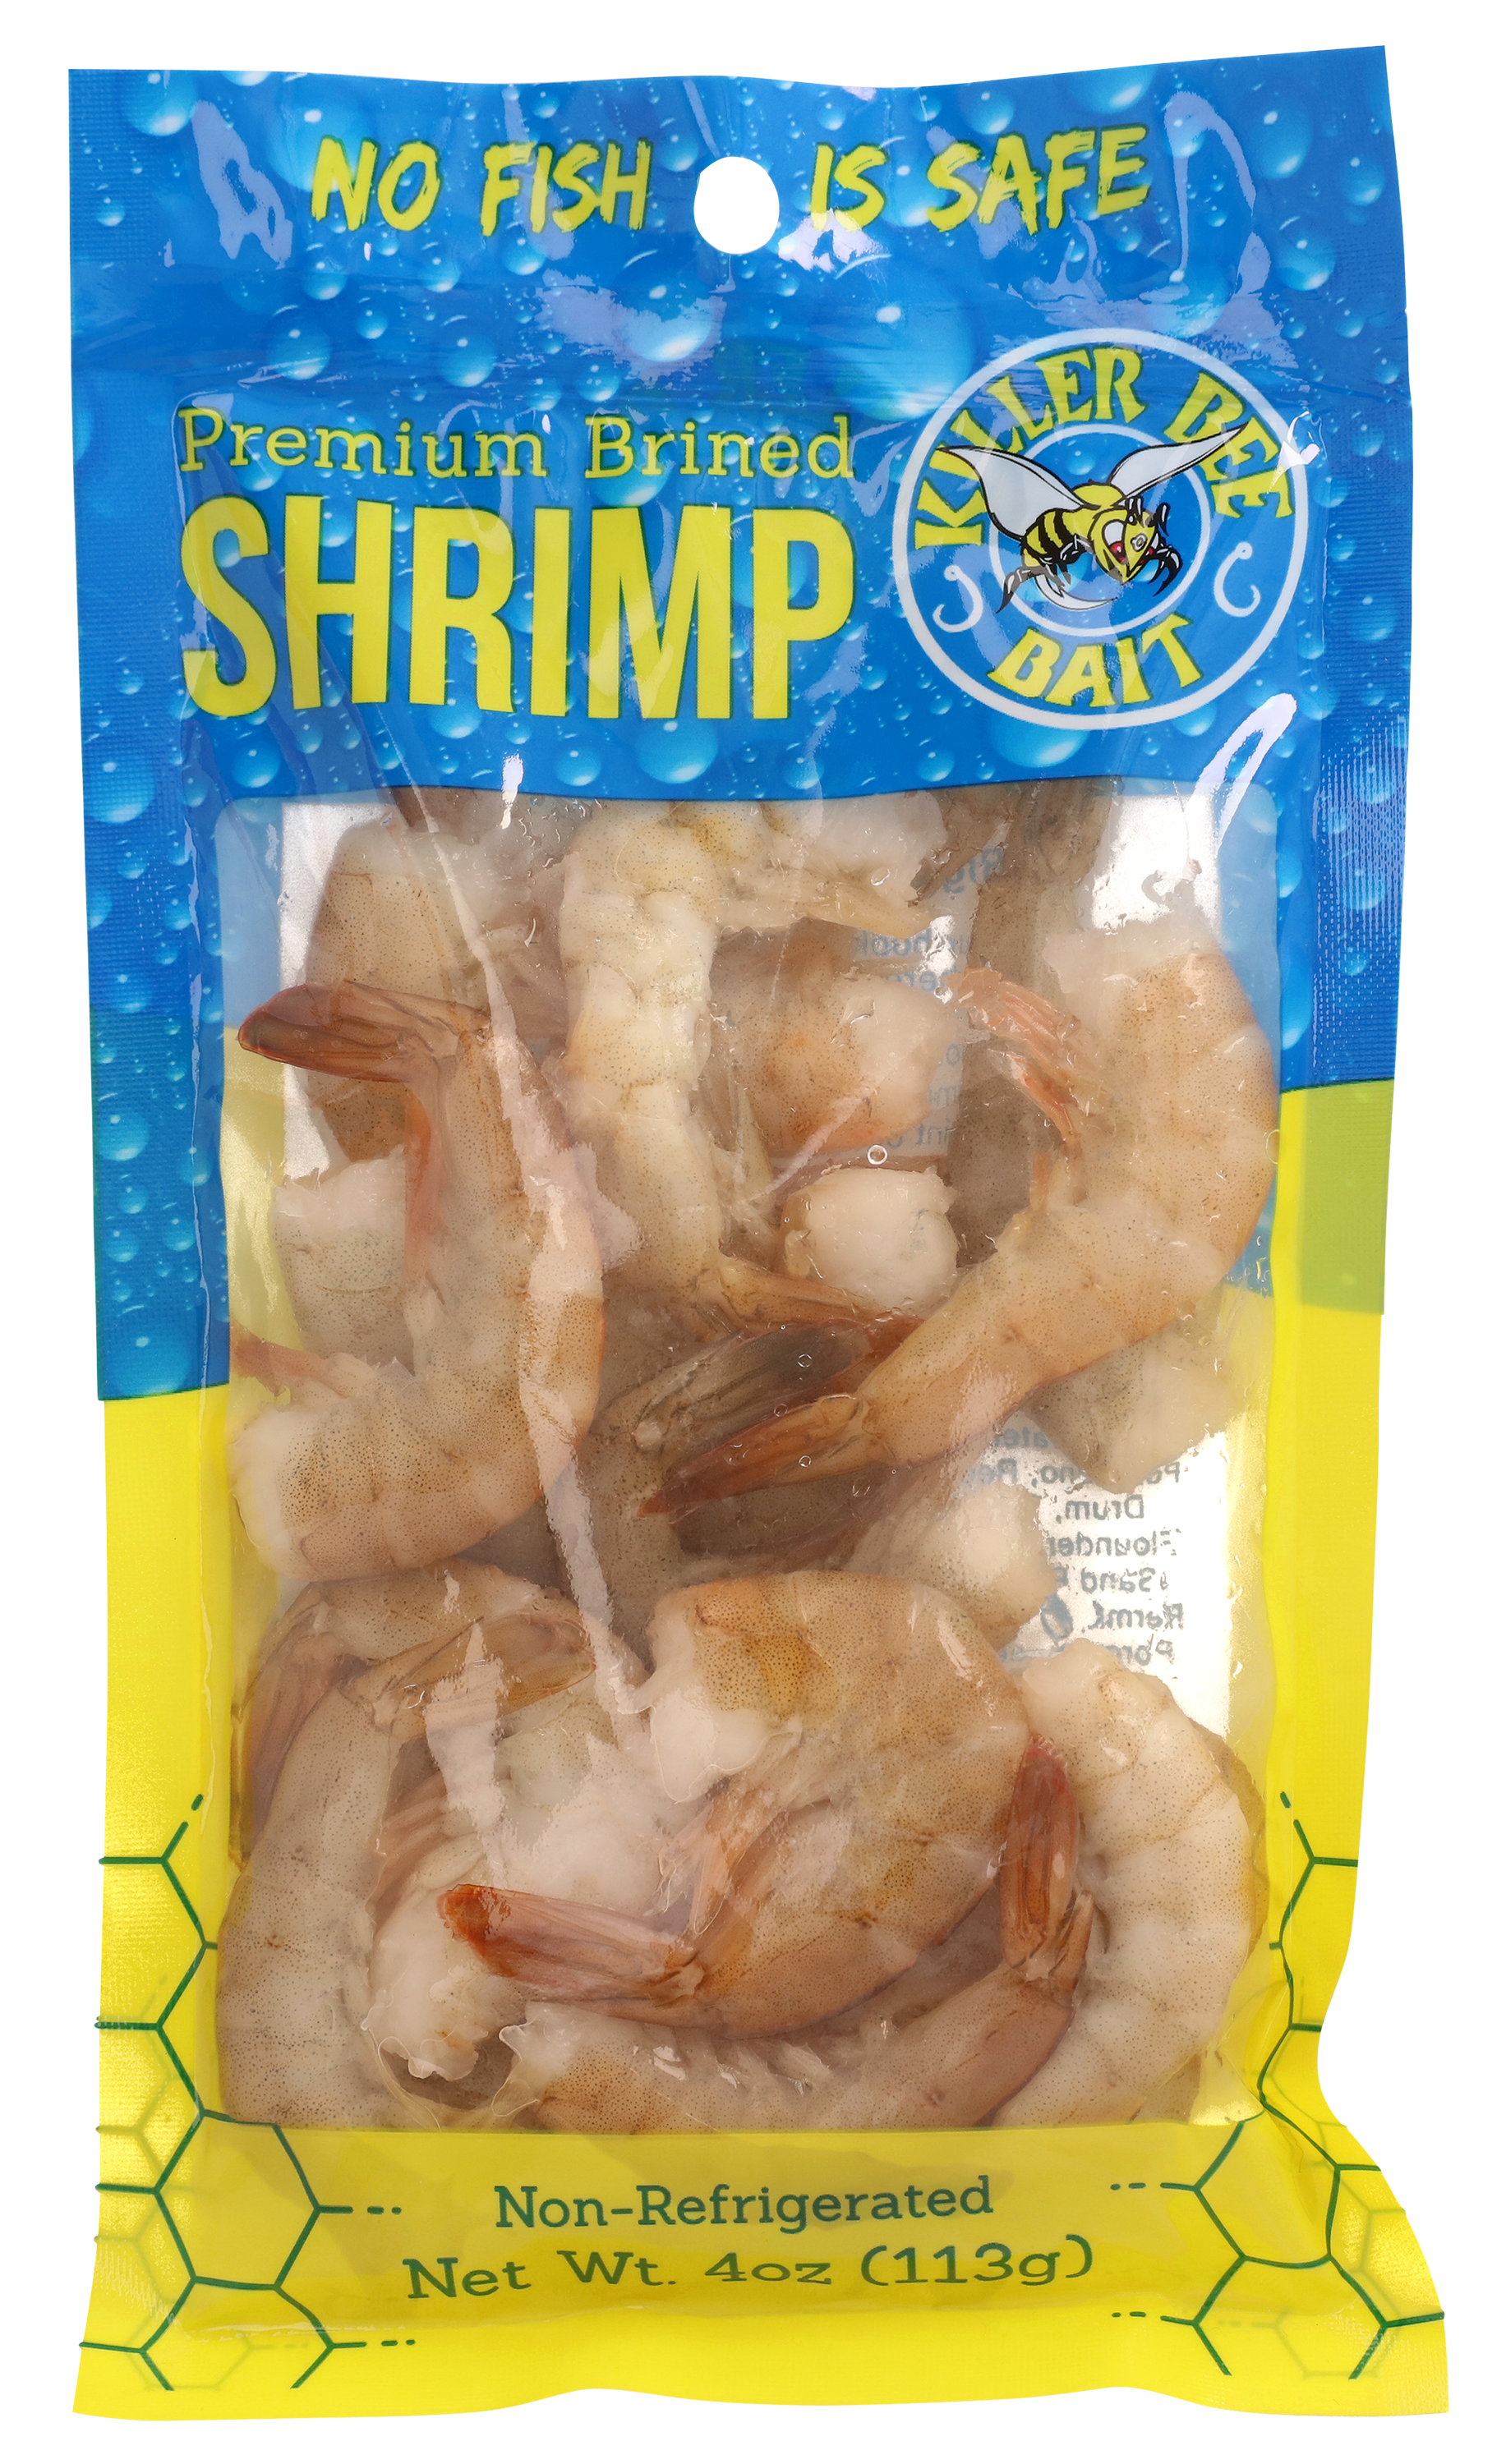 Fishbites E-Z Shrimp Saltwater Baits